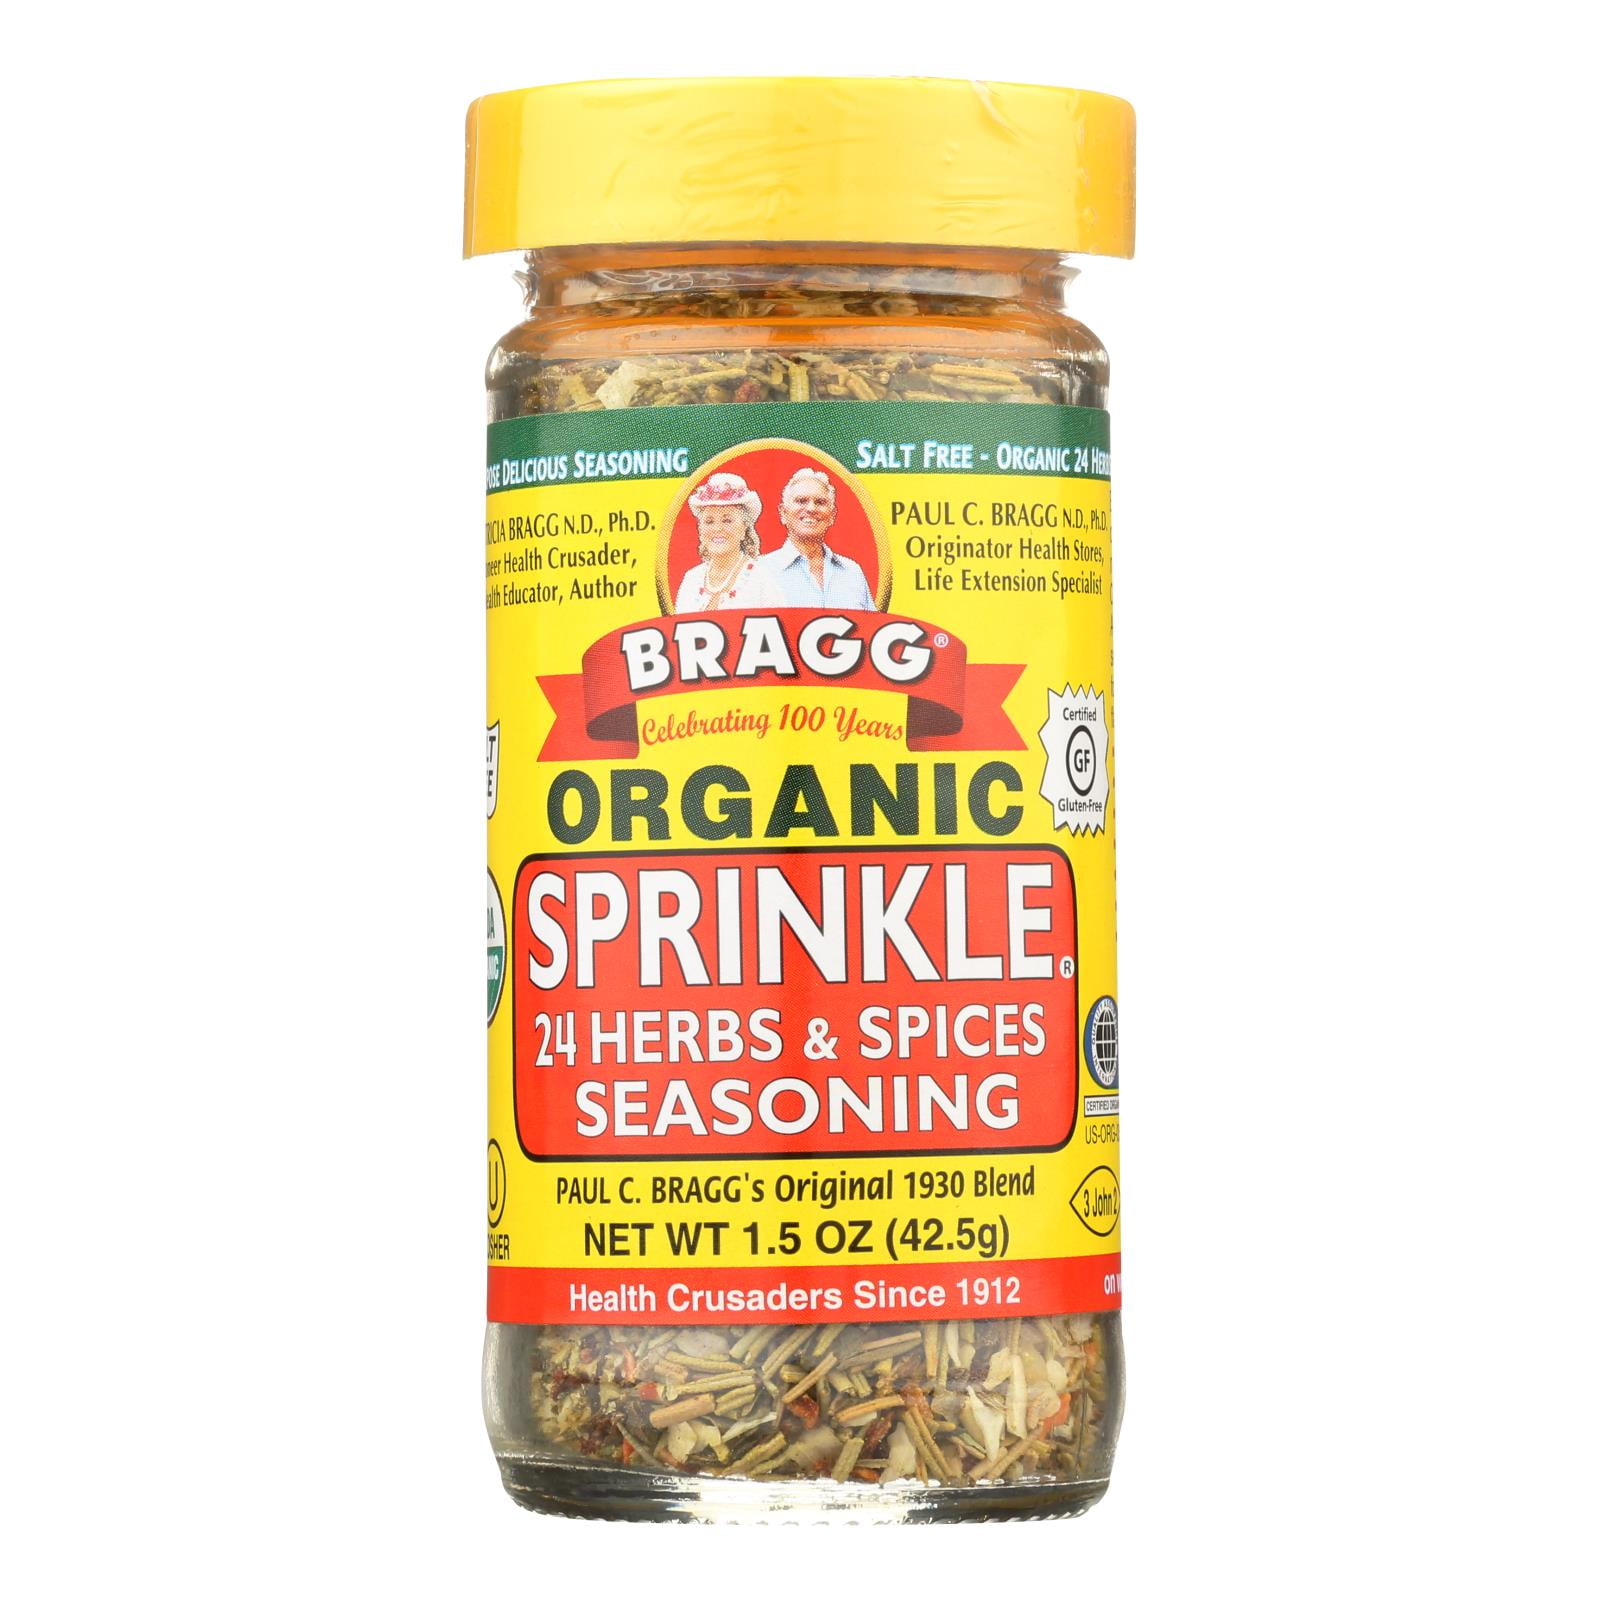 Bragg Sprinkle Seasoning Gluten Free Organic